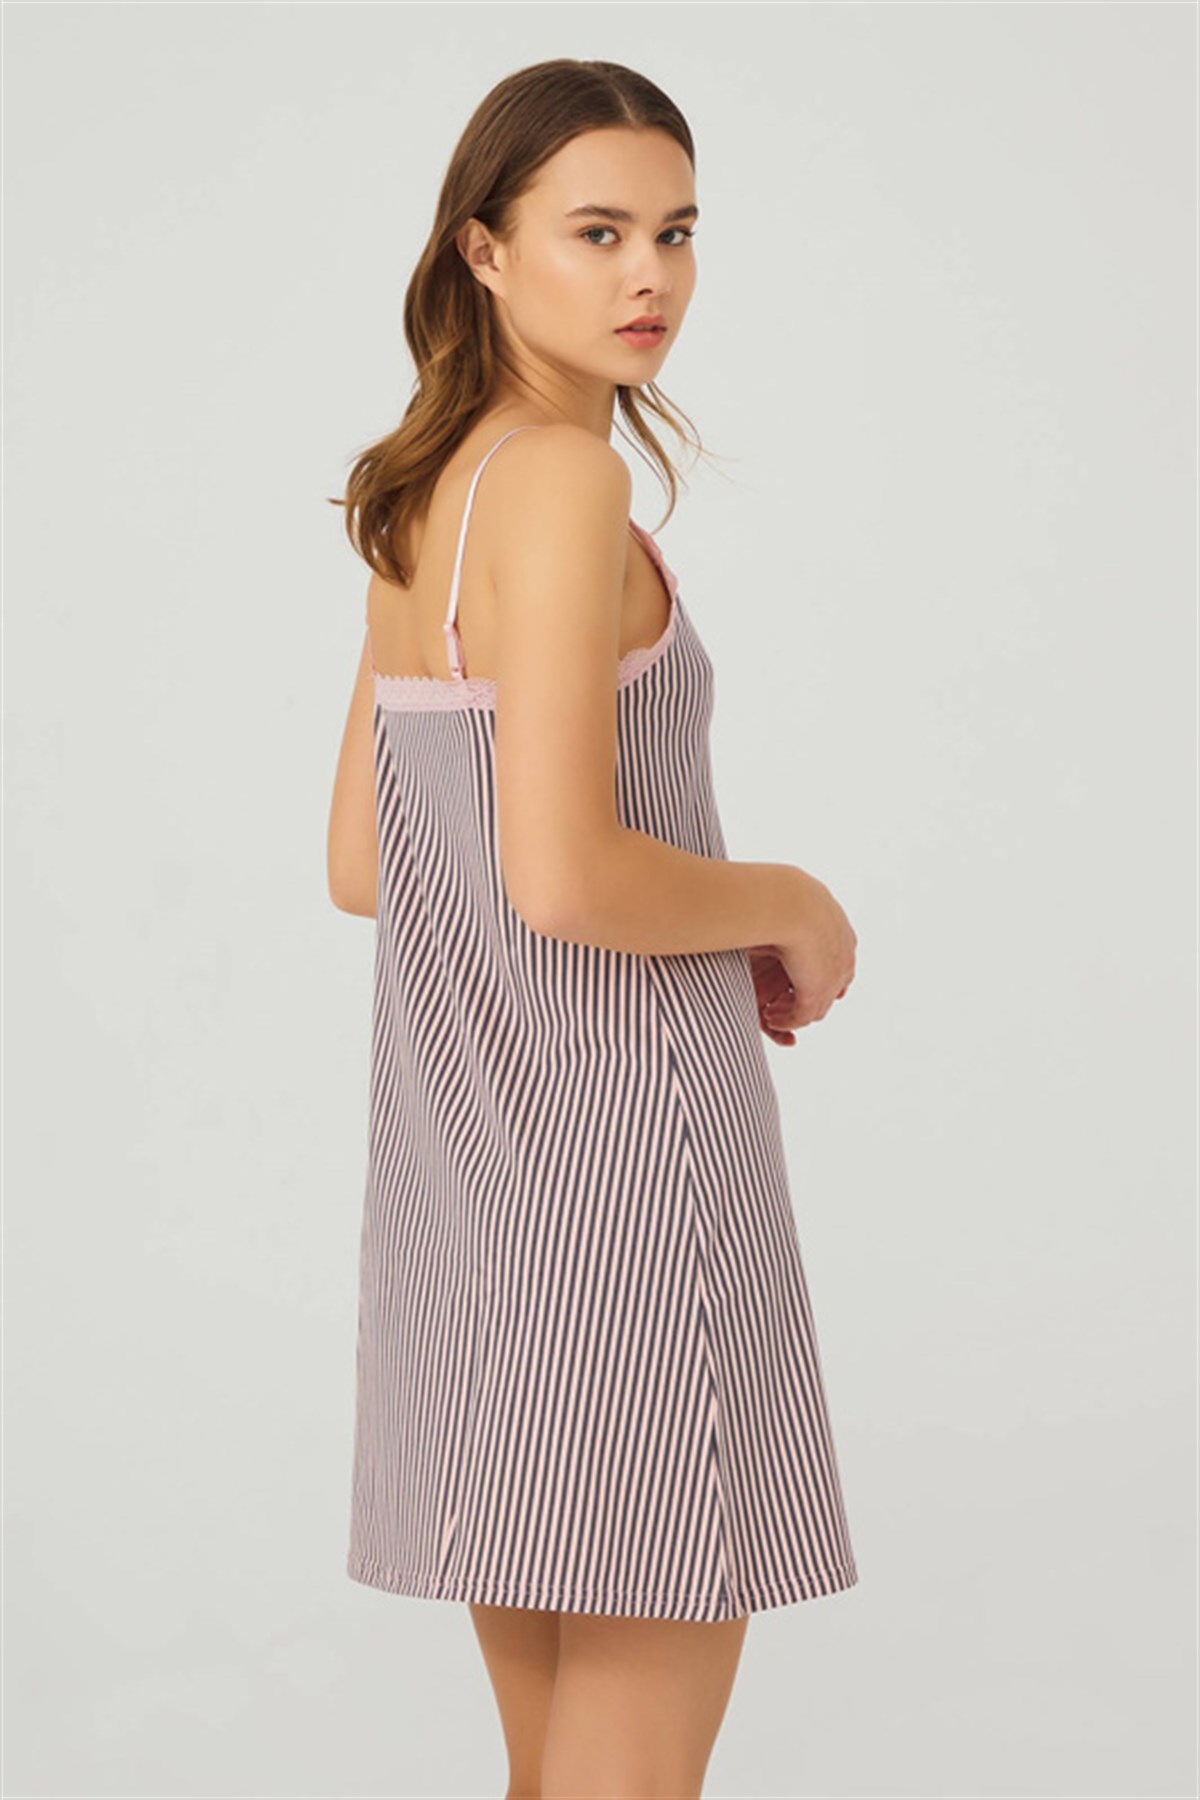 pink-grey-striped-cotton-nightwear-with-adjustable-strap-ch1406-emp404-1-1